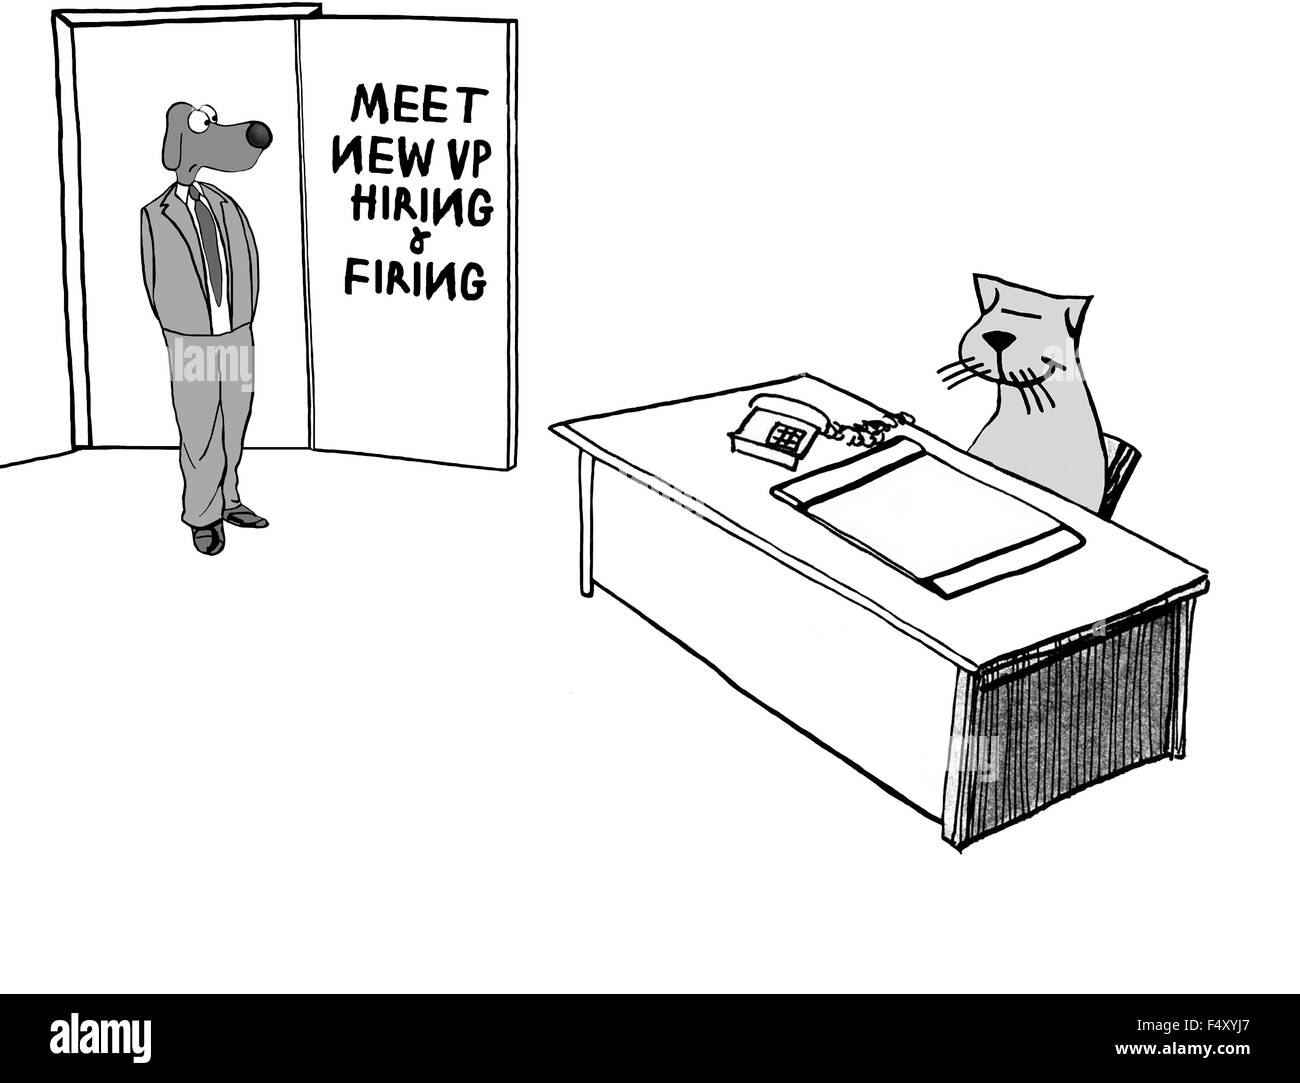 Business cartoon showing dog entering the office of new employee cat, 'Meet New VP Hiring & Firing'. Stock Photo